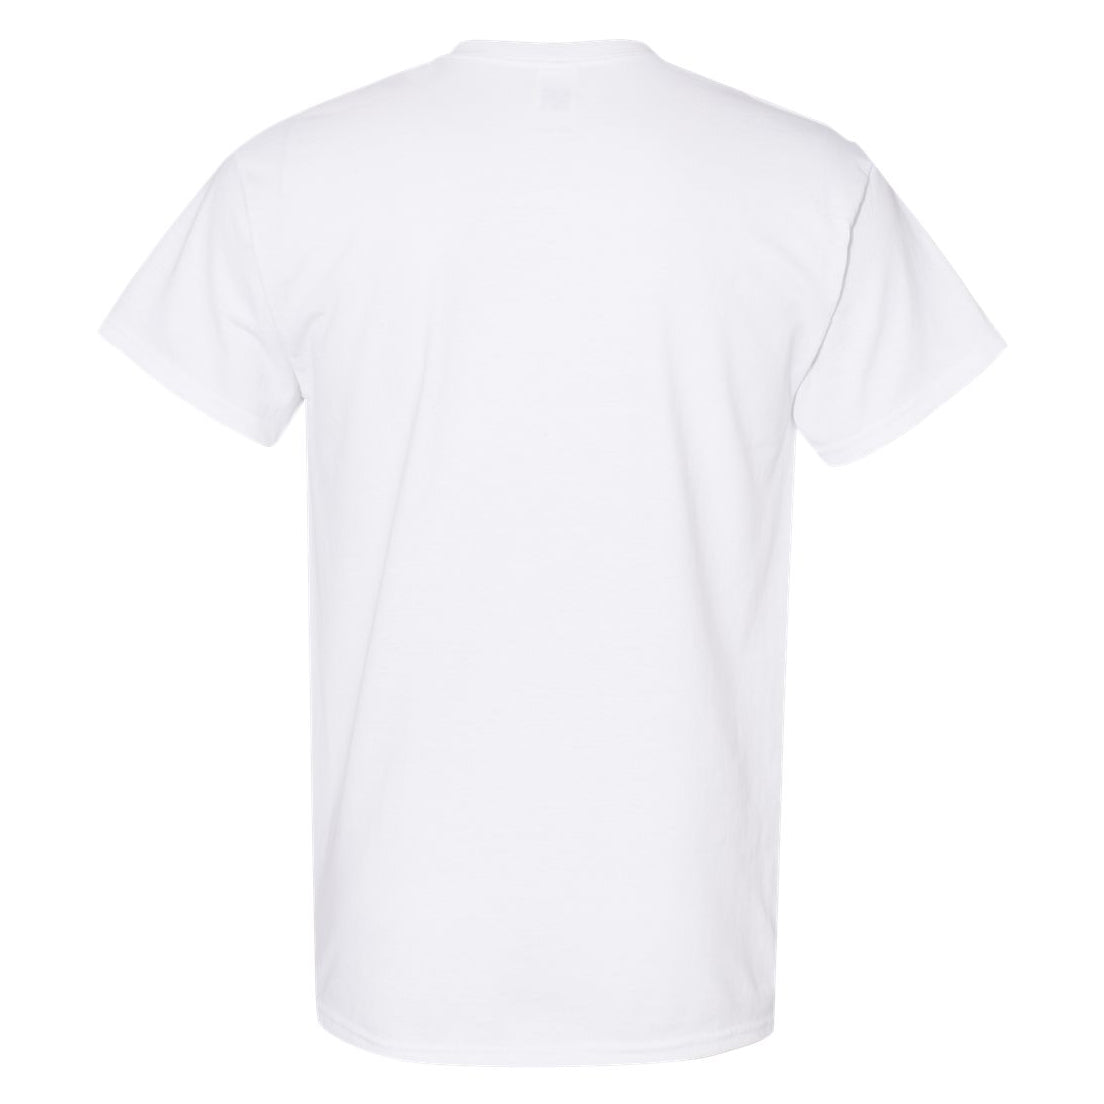 Flat Rock Rams T-Shirt | Rams Stacked Design